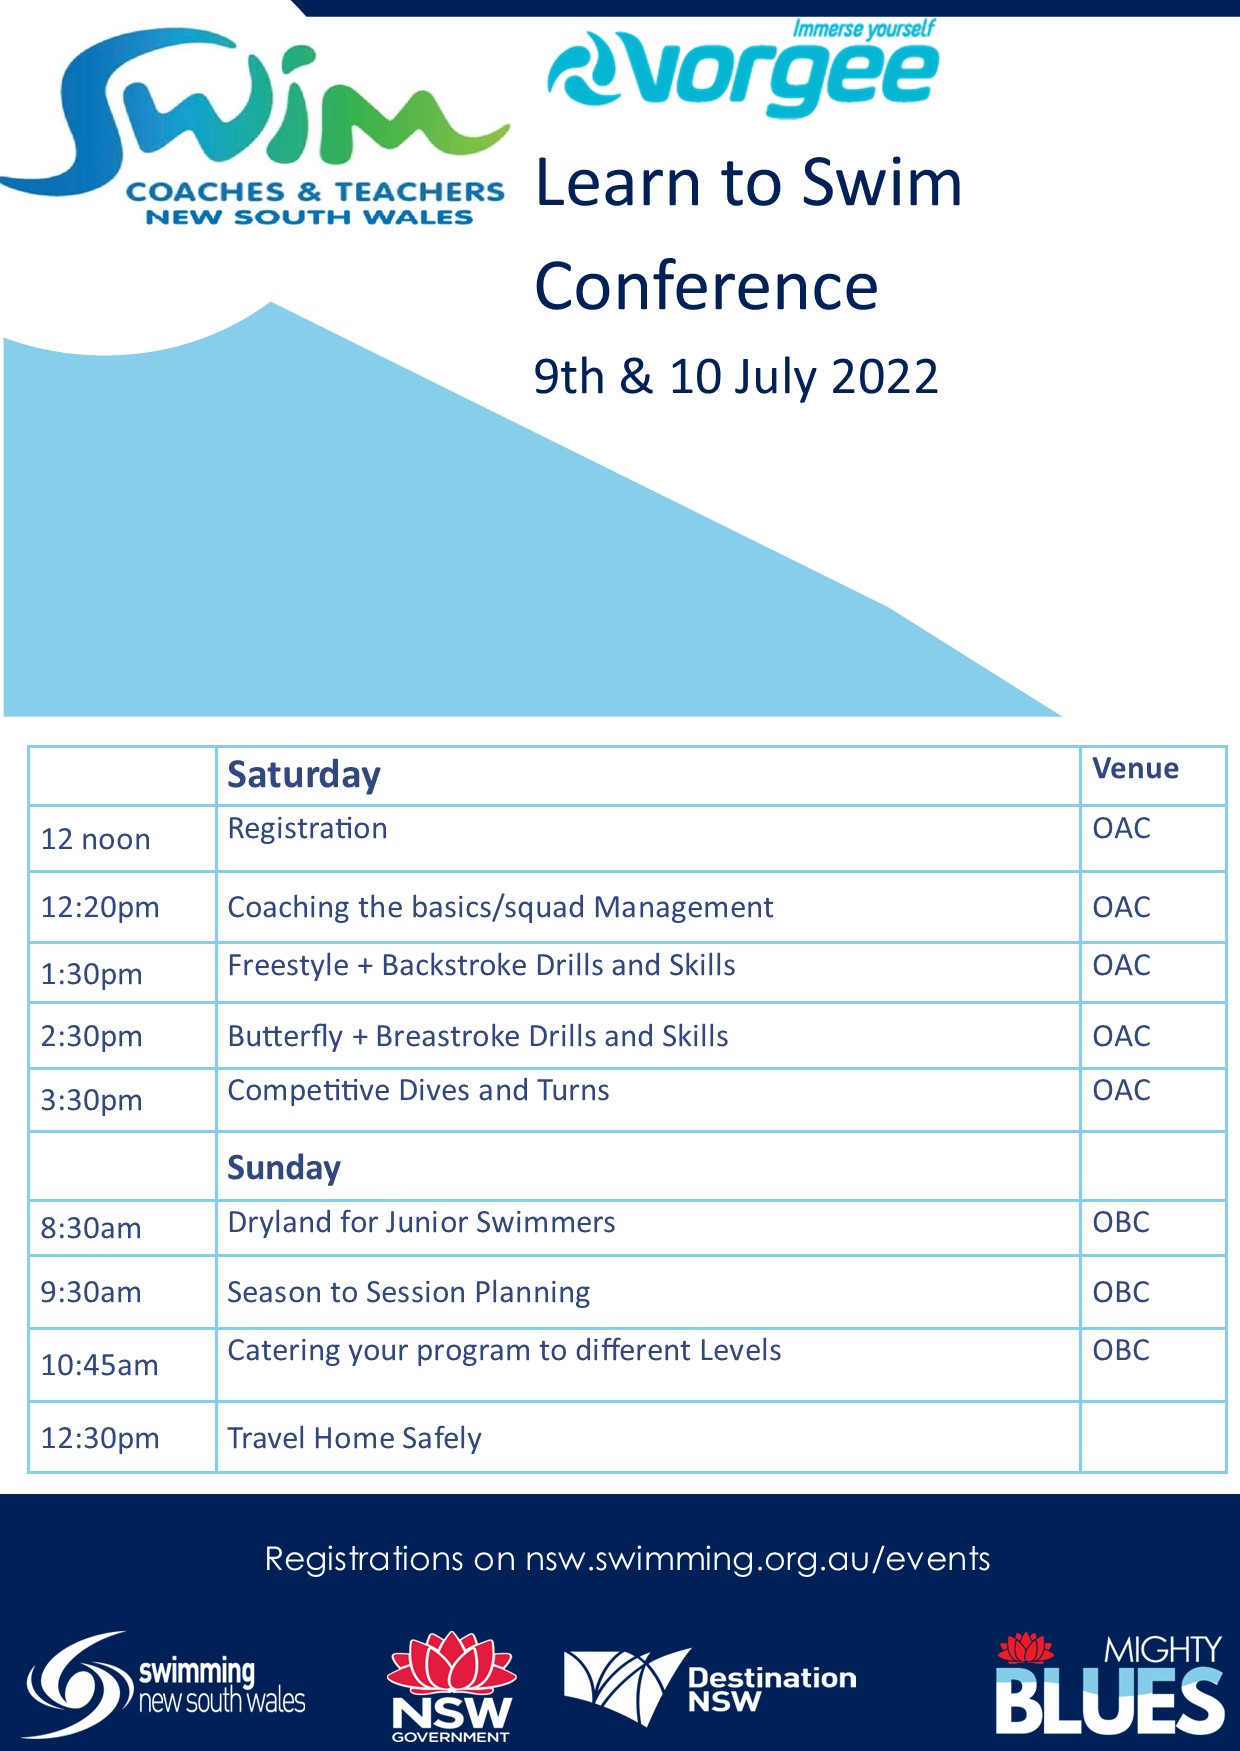 SCTA NSW 2022 Conference Learn to Swim Program